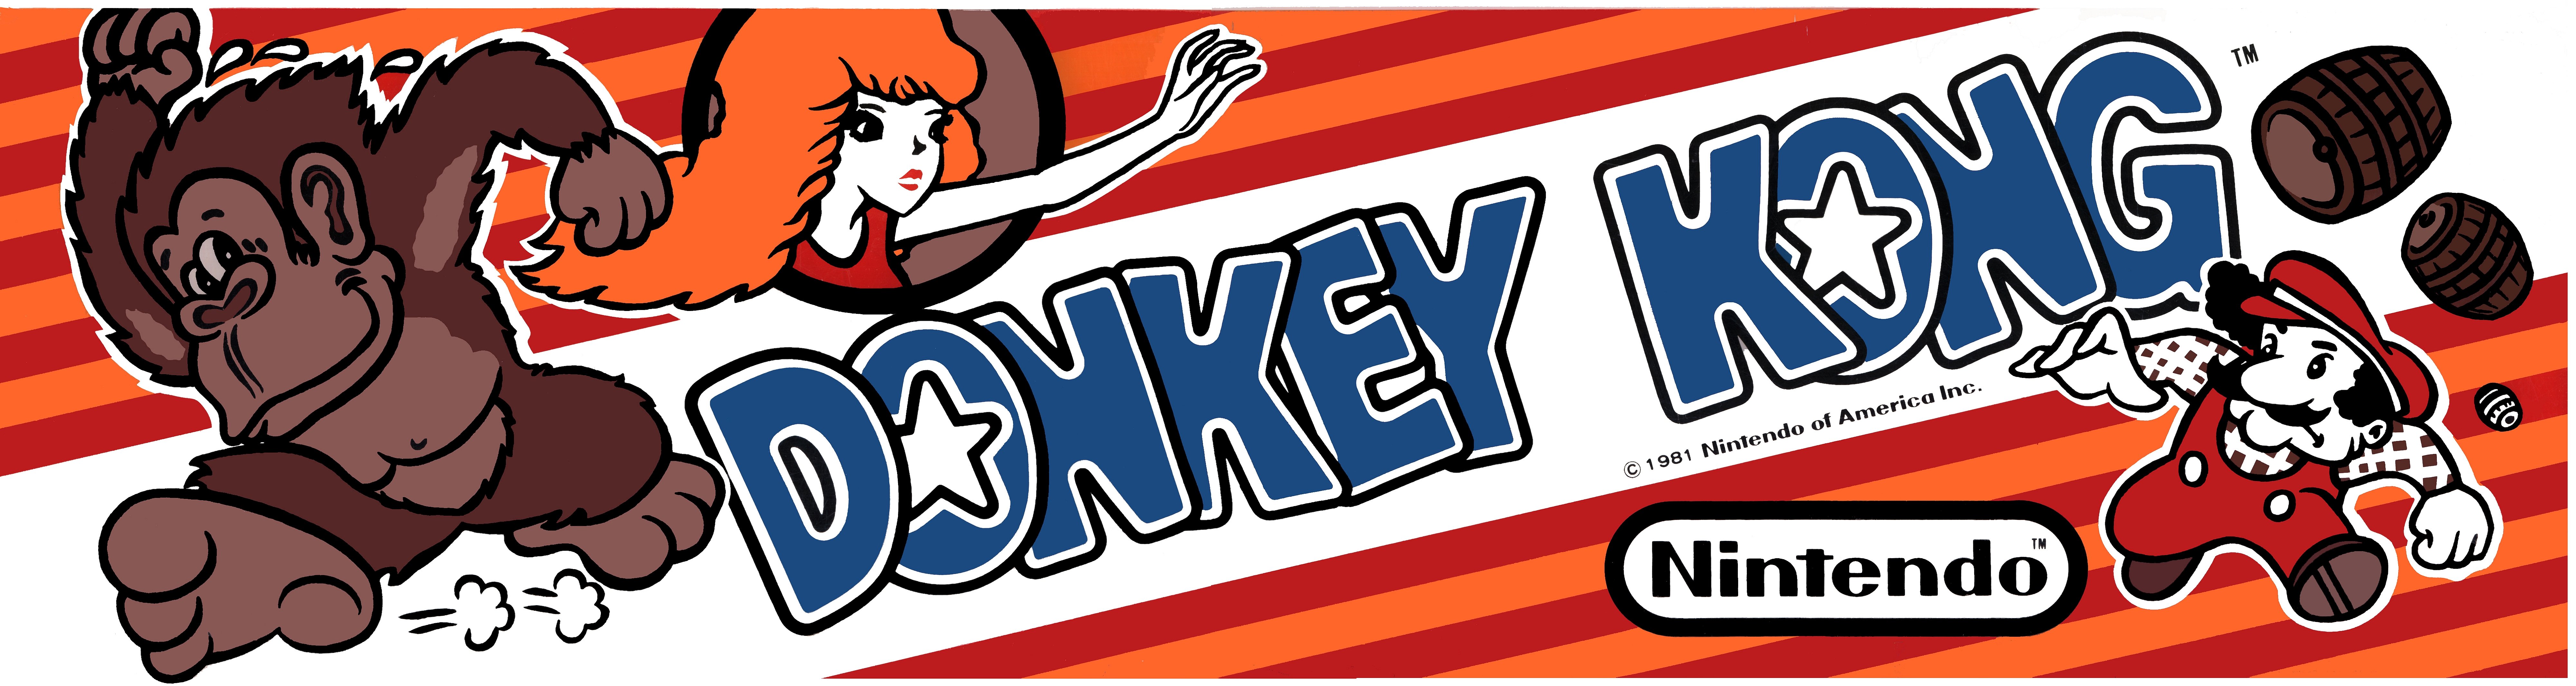 Handy-Wallpaper Donkey Kong, Computerspiele kostenlos herunterladen.